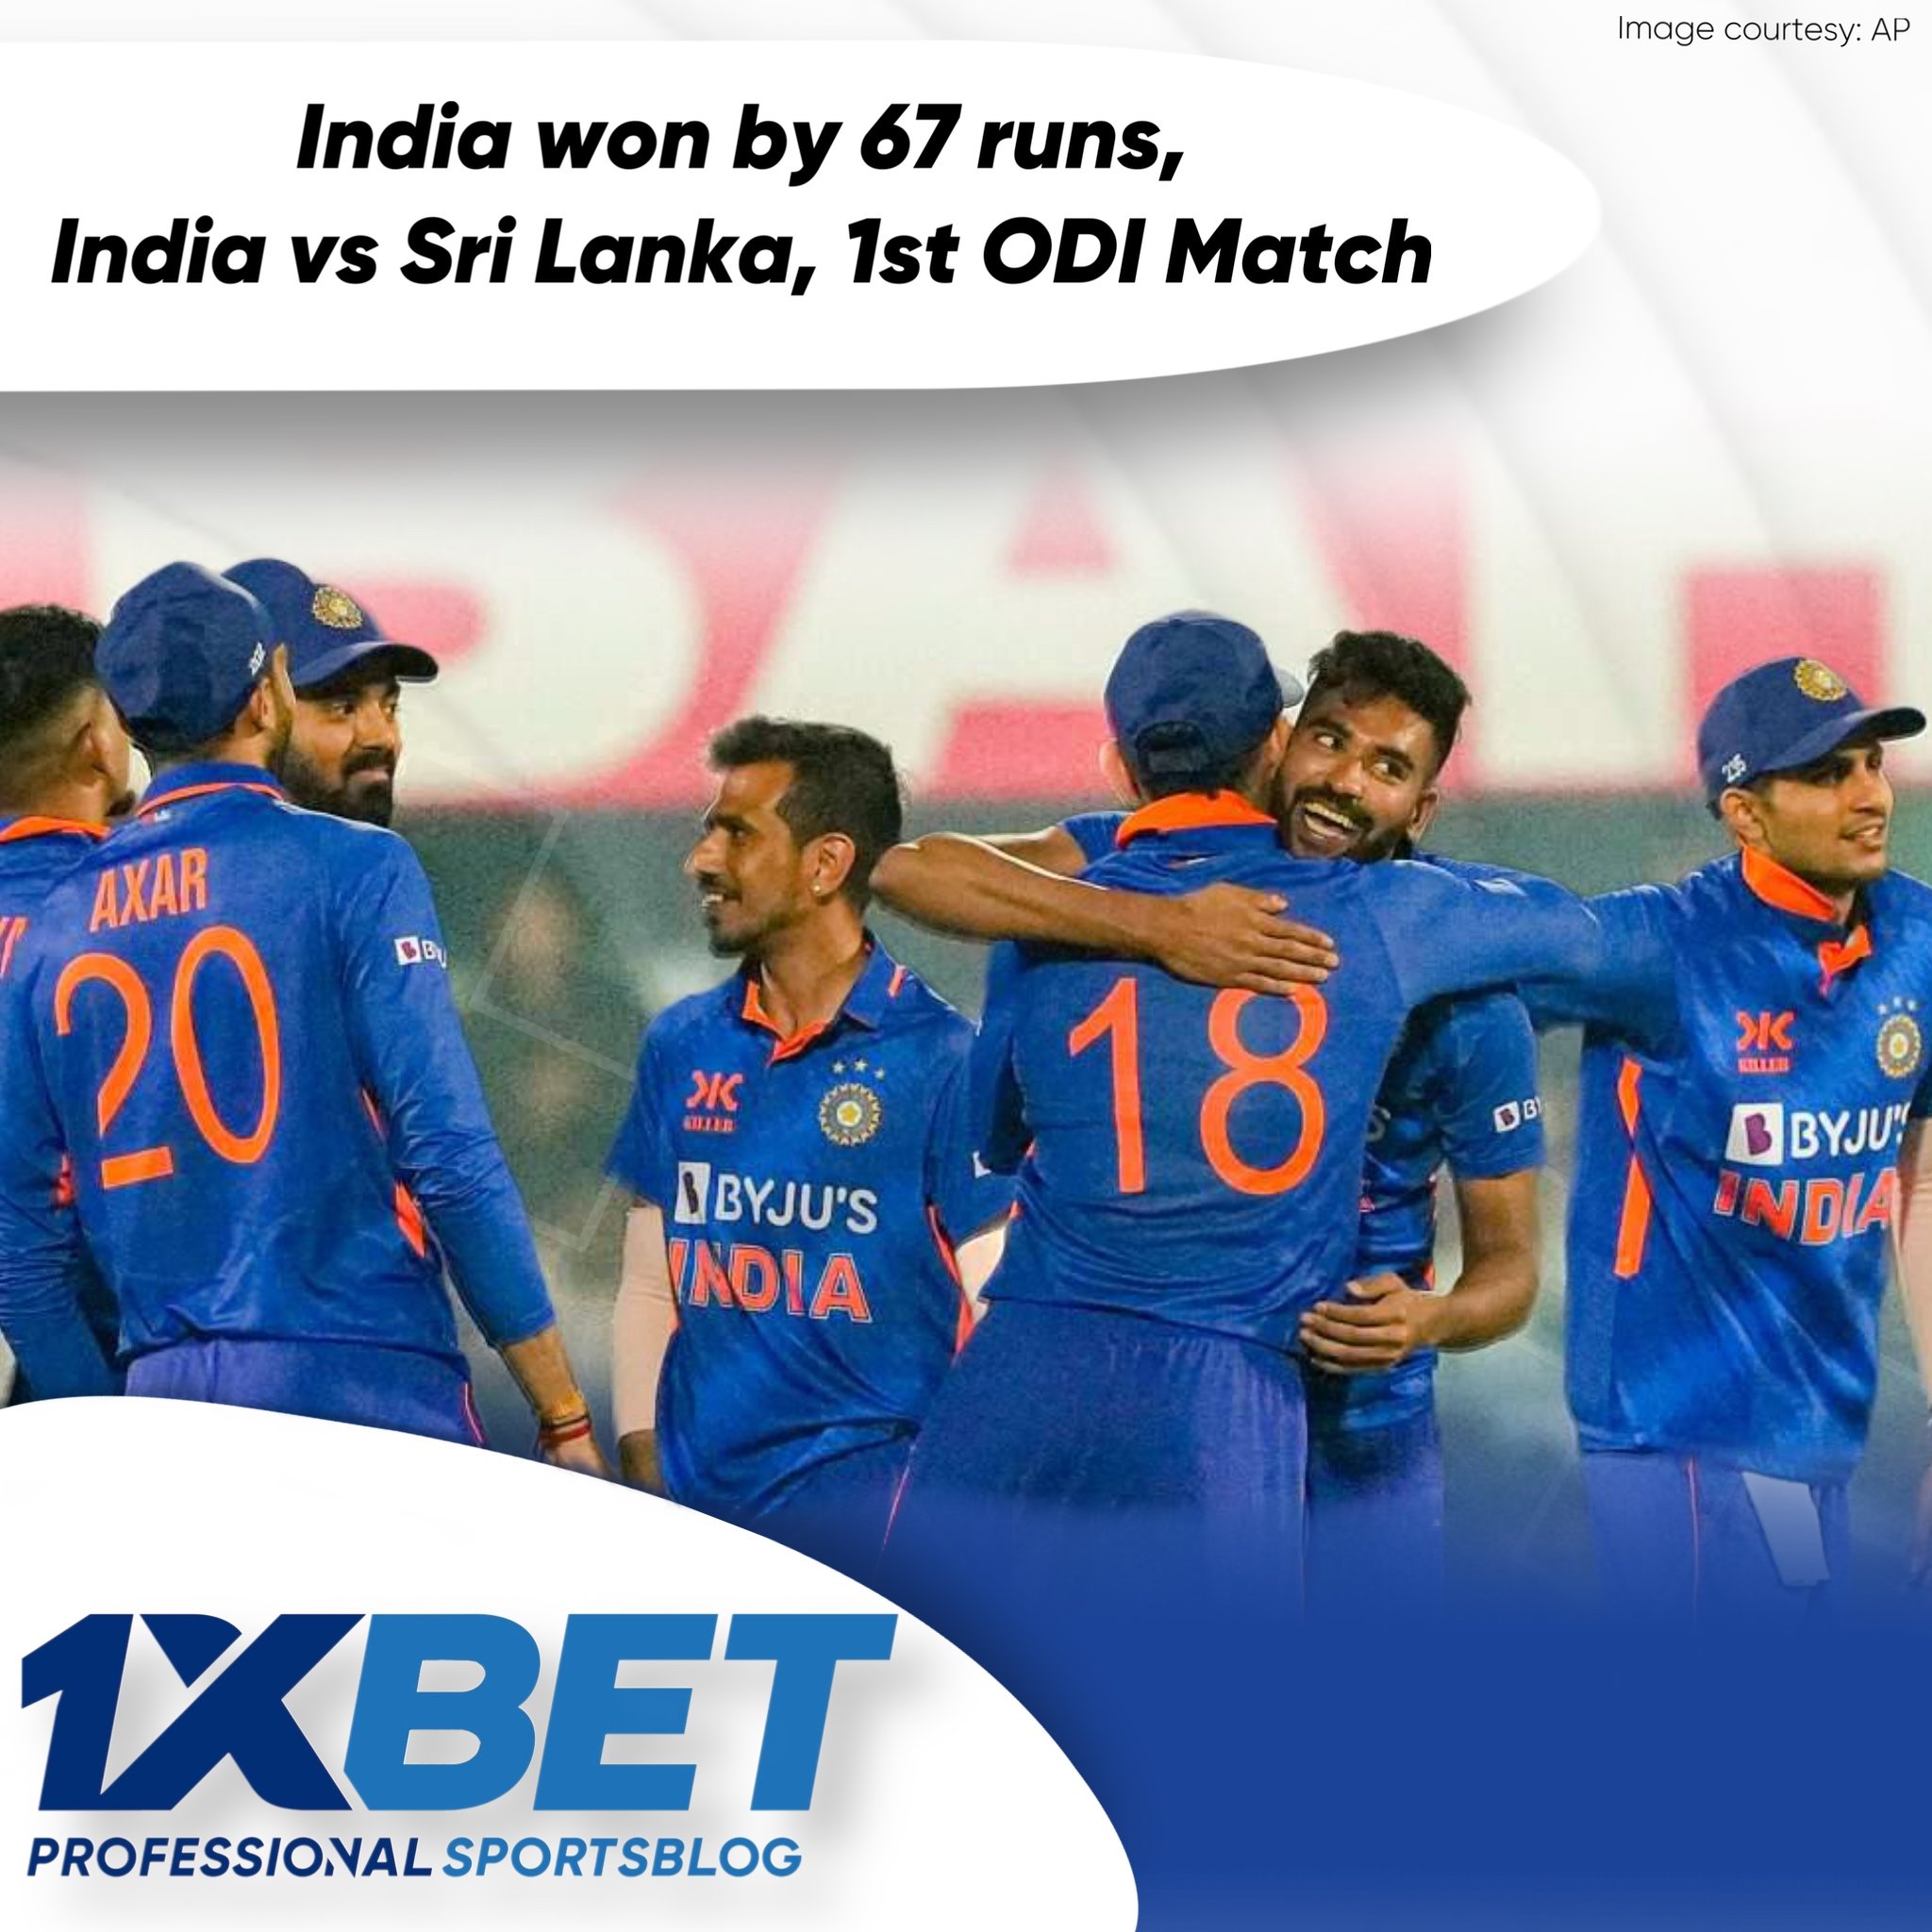 India won by 67 runs